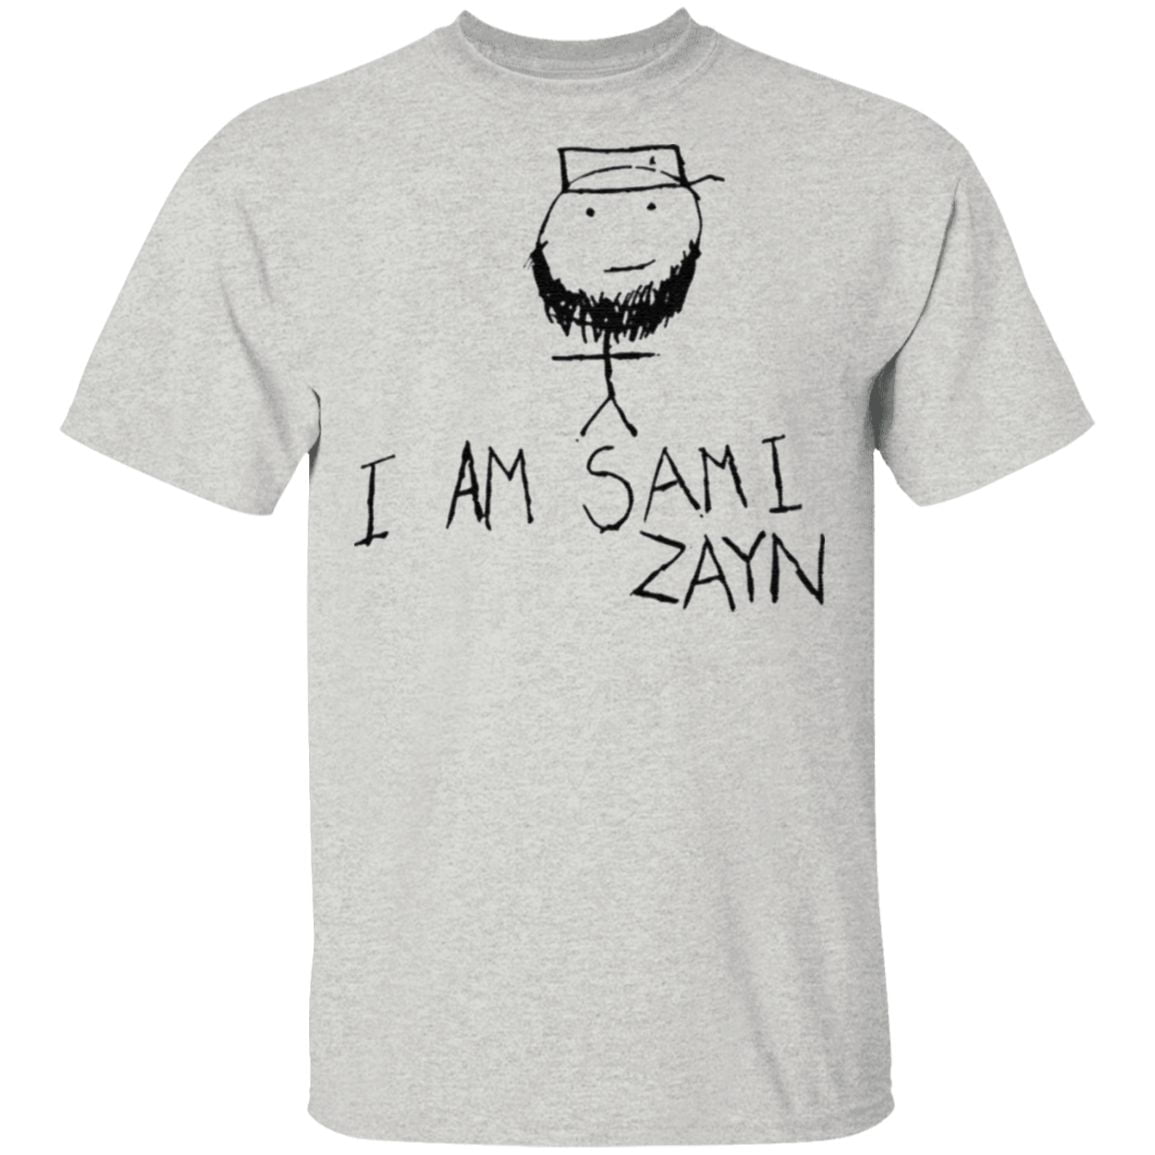 I Am Sami Zayn Funny Doode T Shirt